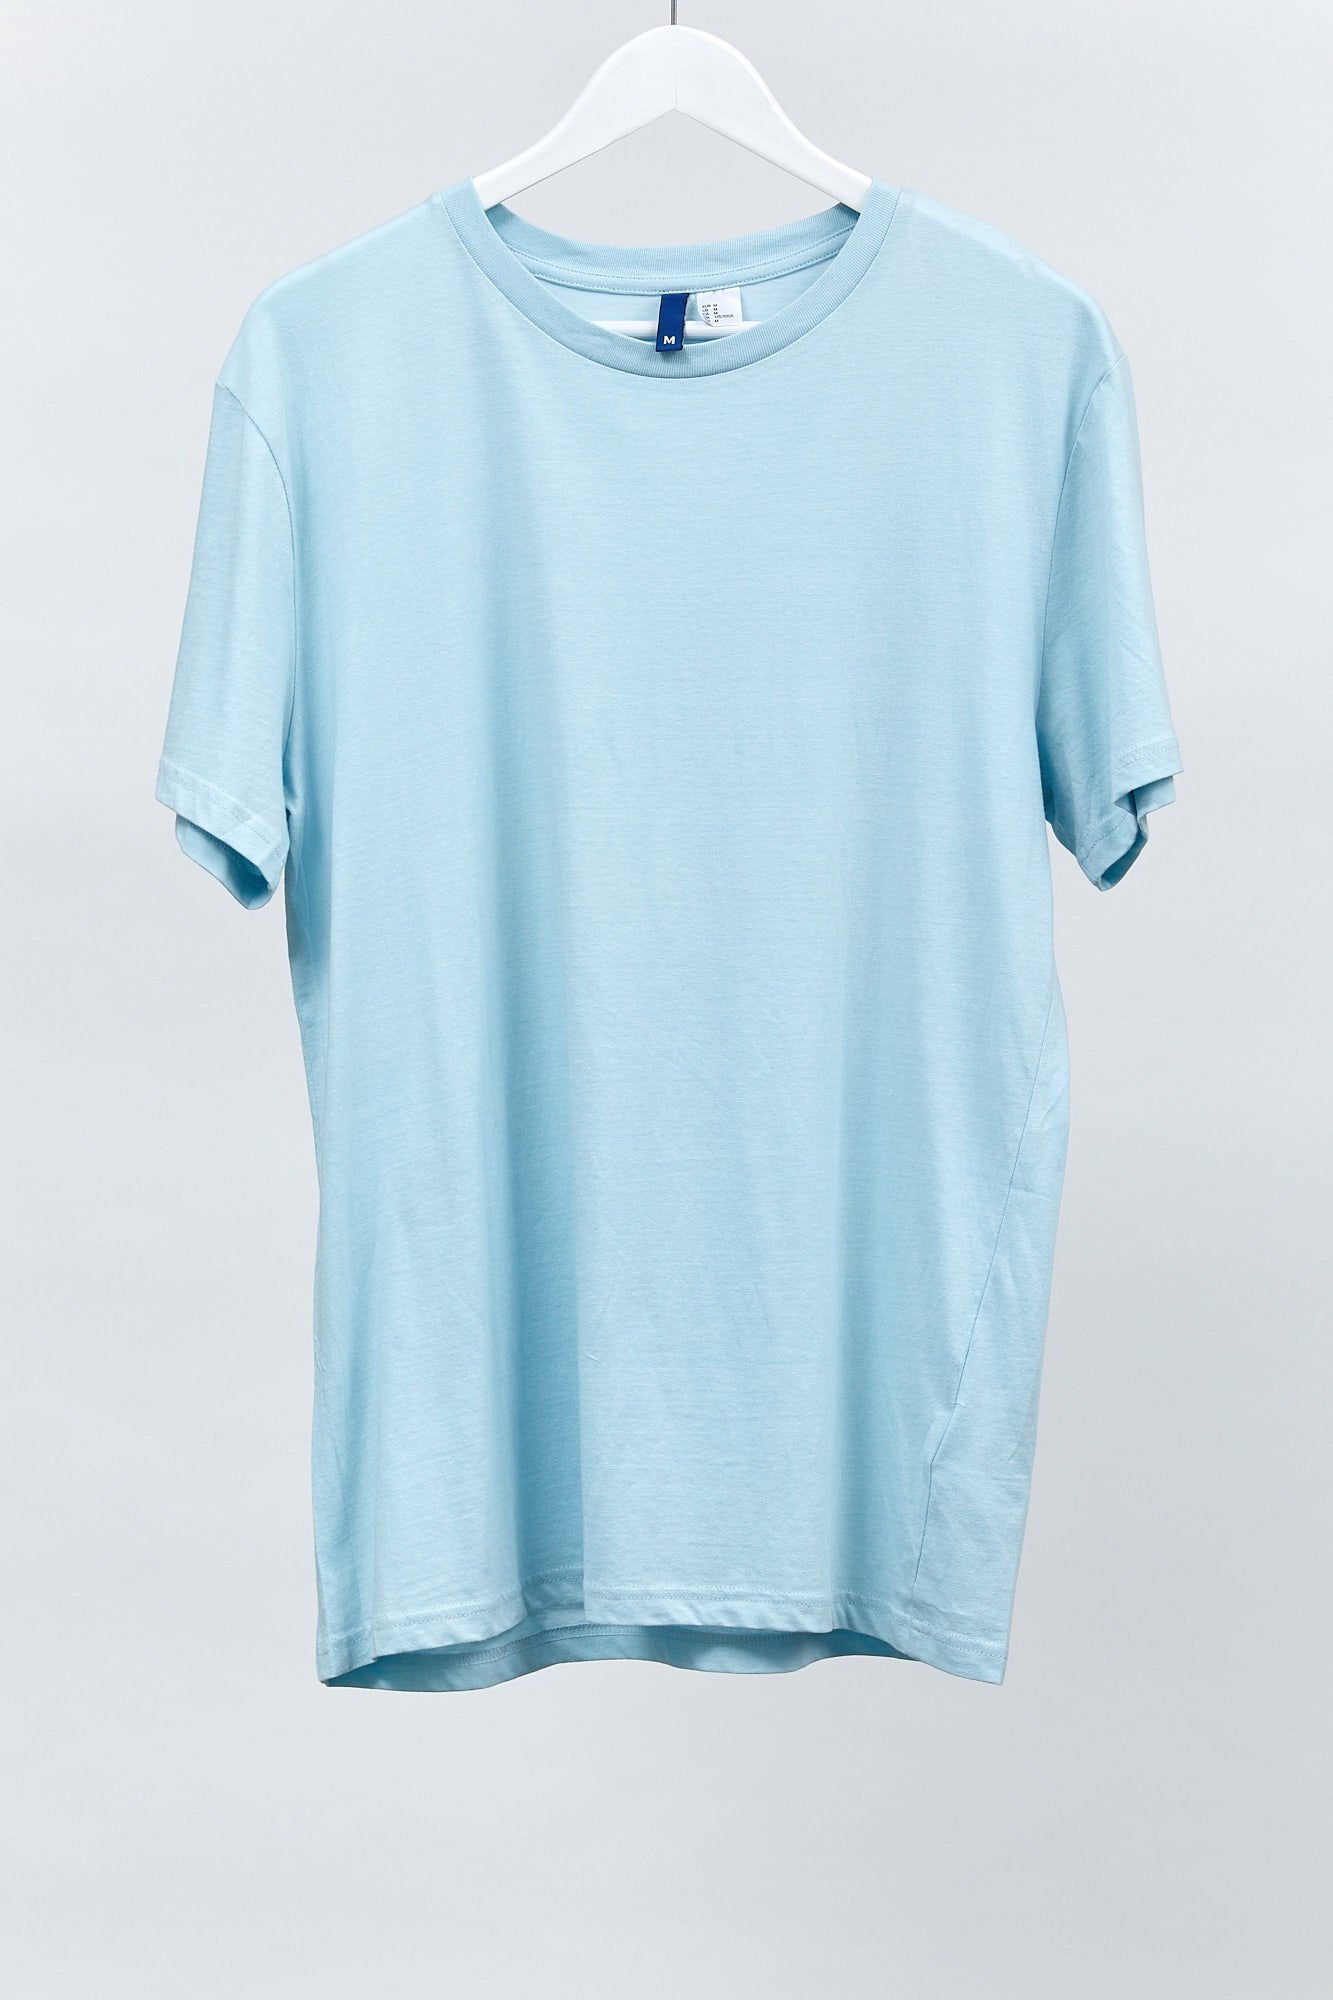 Mens H&M Light Blue T-Shirt: Size Medium